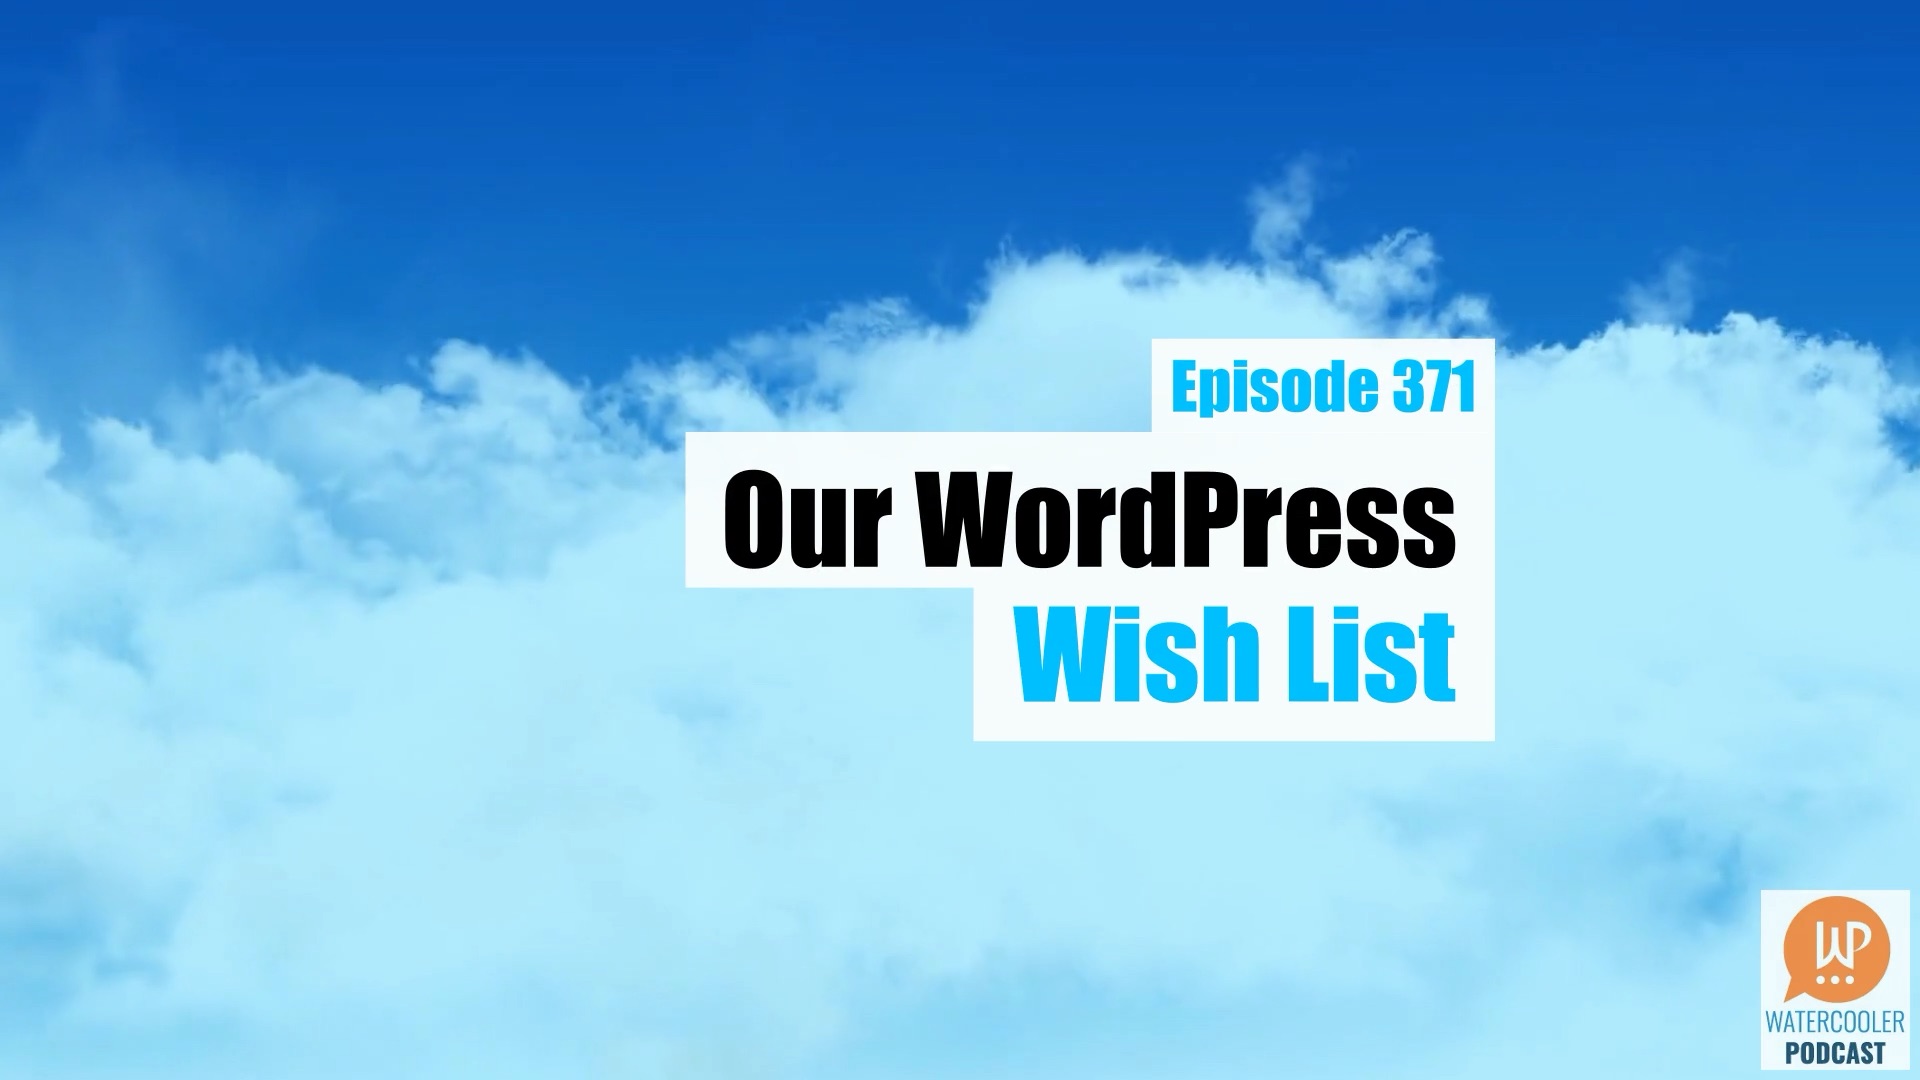 EP371 - Our WordPress Wish List